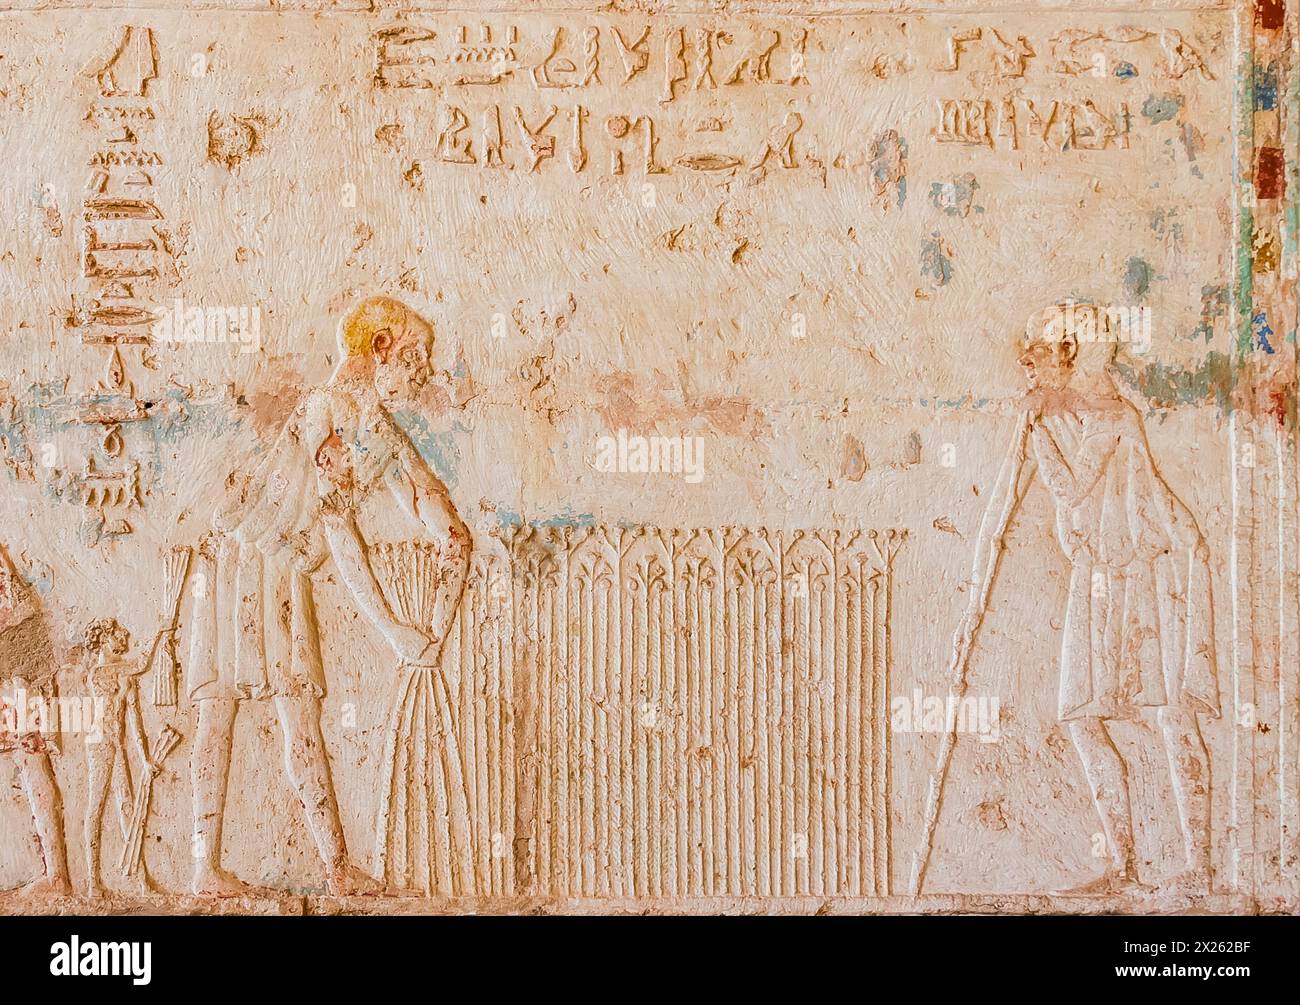 Egitto, tonno el Gebel, tomba di Petosiris, raccolta del lino. Foto Stock